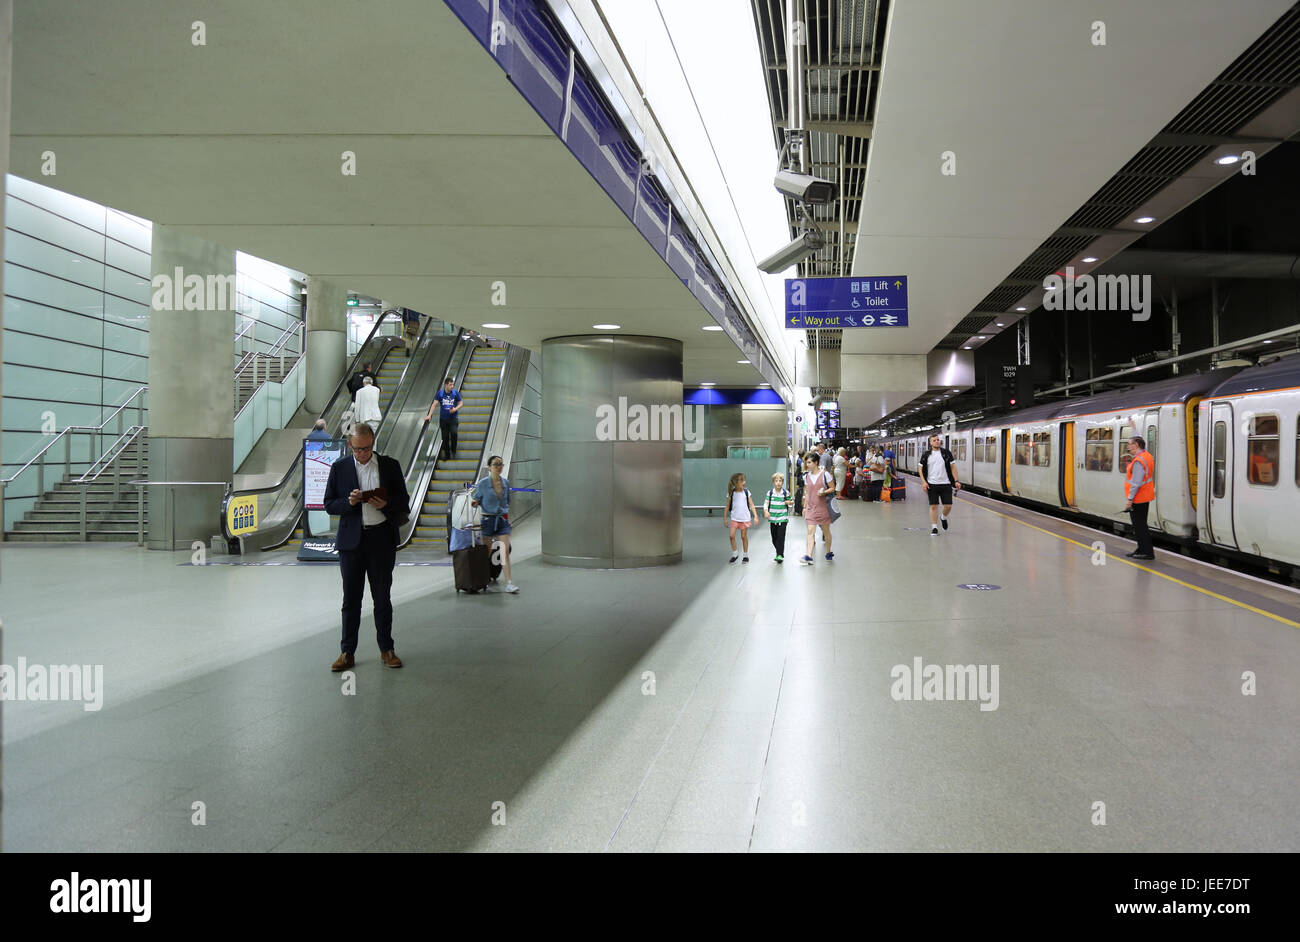 Southbound Thameslink platform at London's St Pancras International station. Located beneath the main line platforms, Thameslink trains cross London. Stock Photo